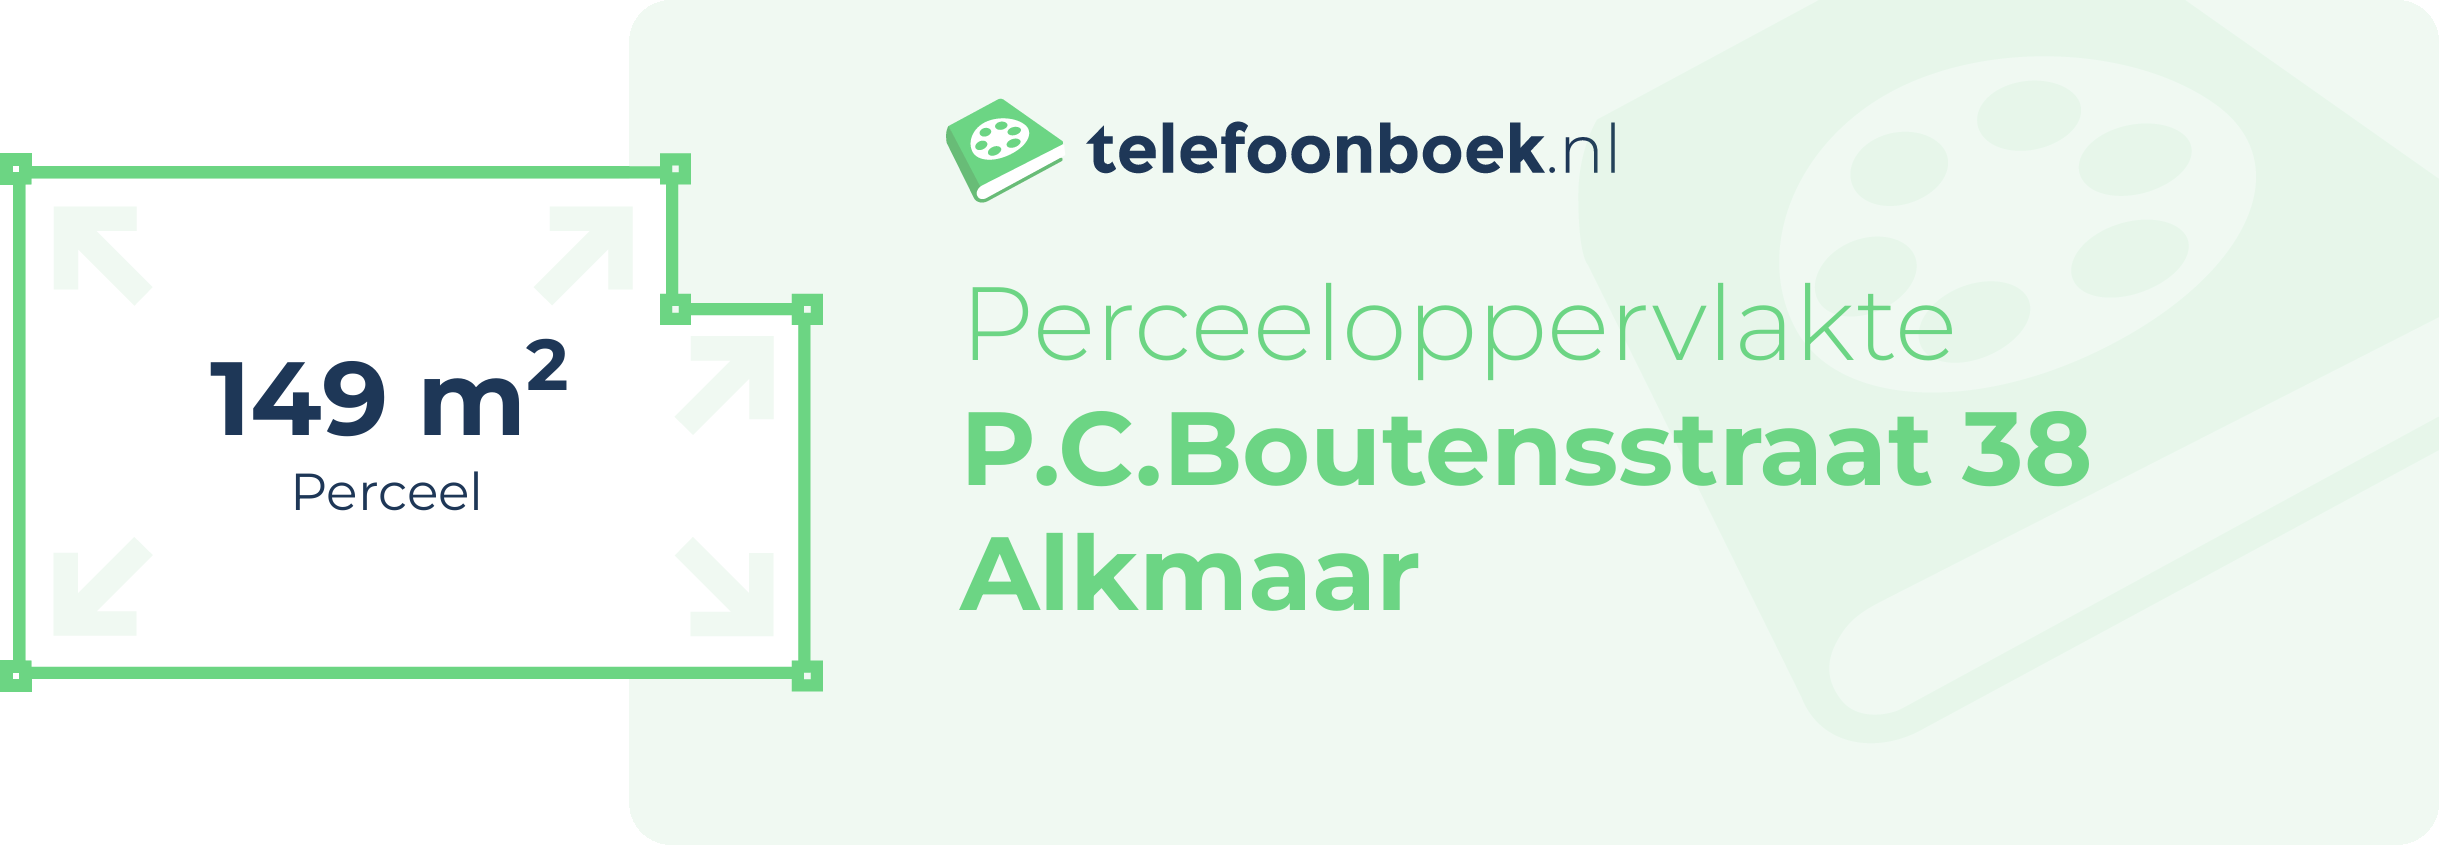 Perceeloppervlakte P.C.Boutensstraat 38 Alkmaar